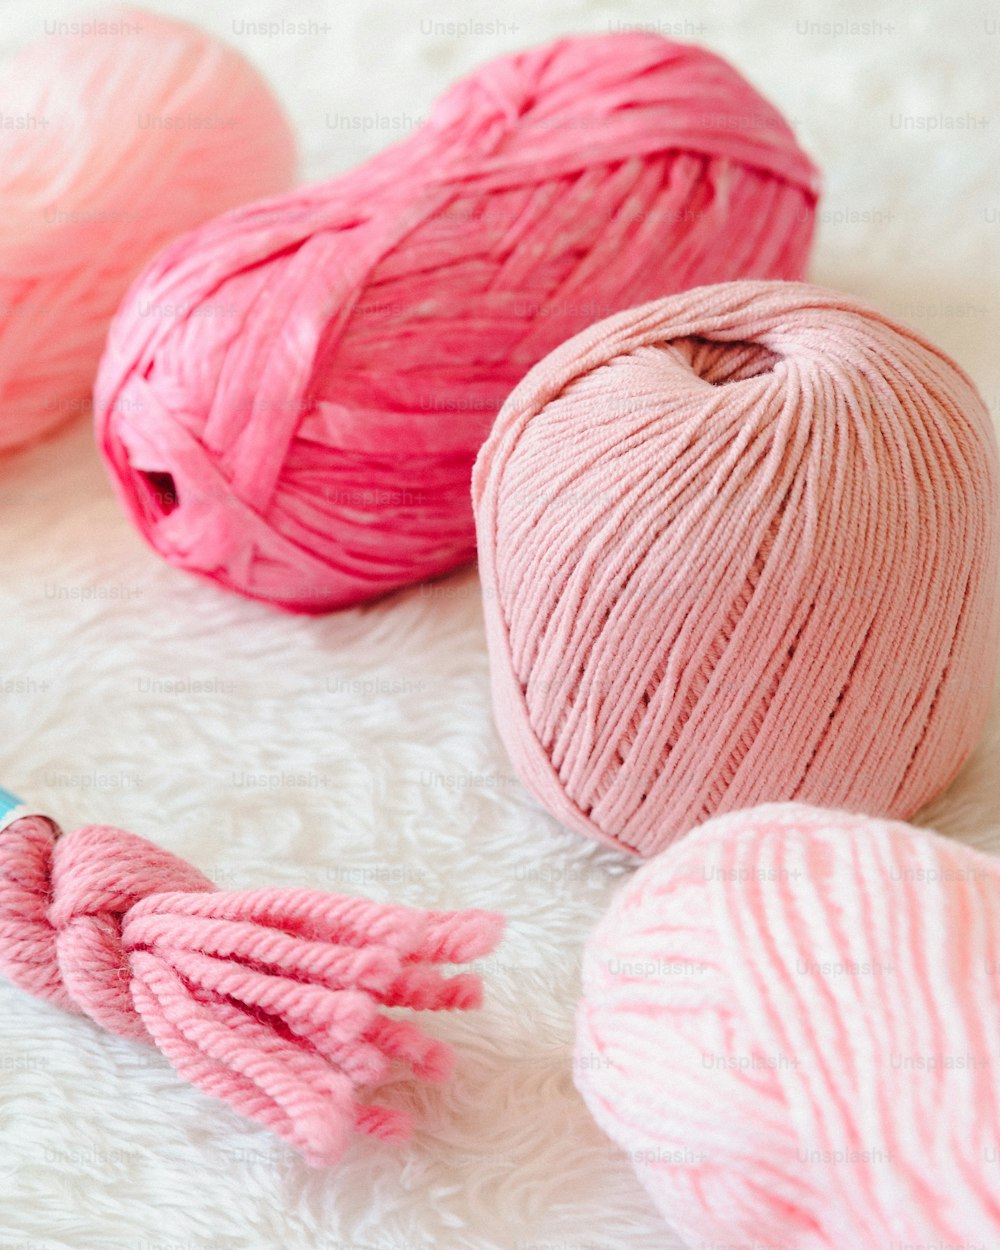 three balls of yarn and a crochet hook